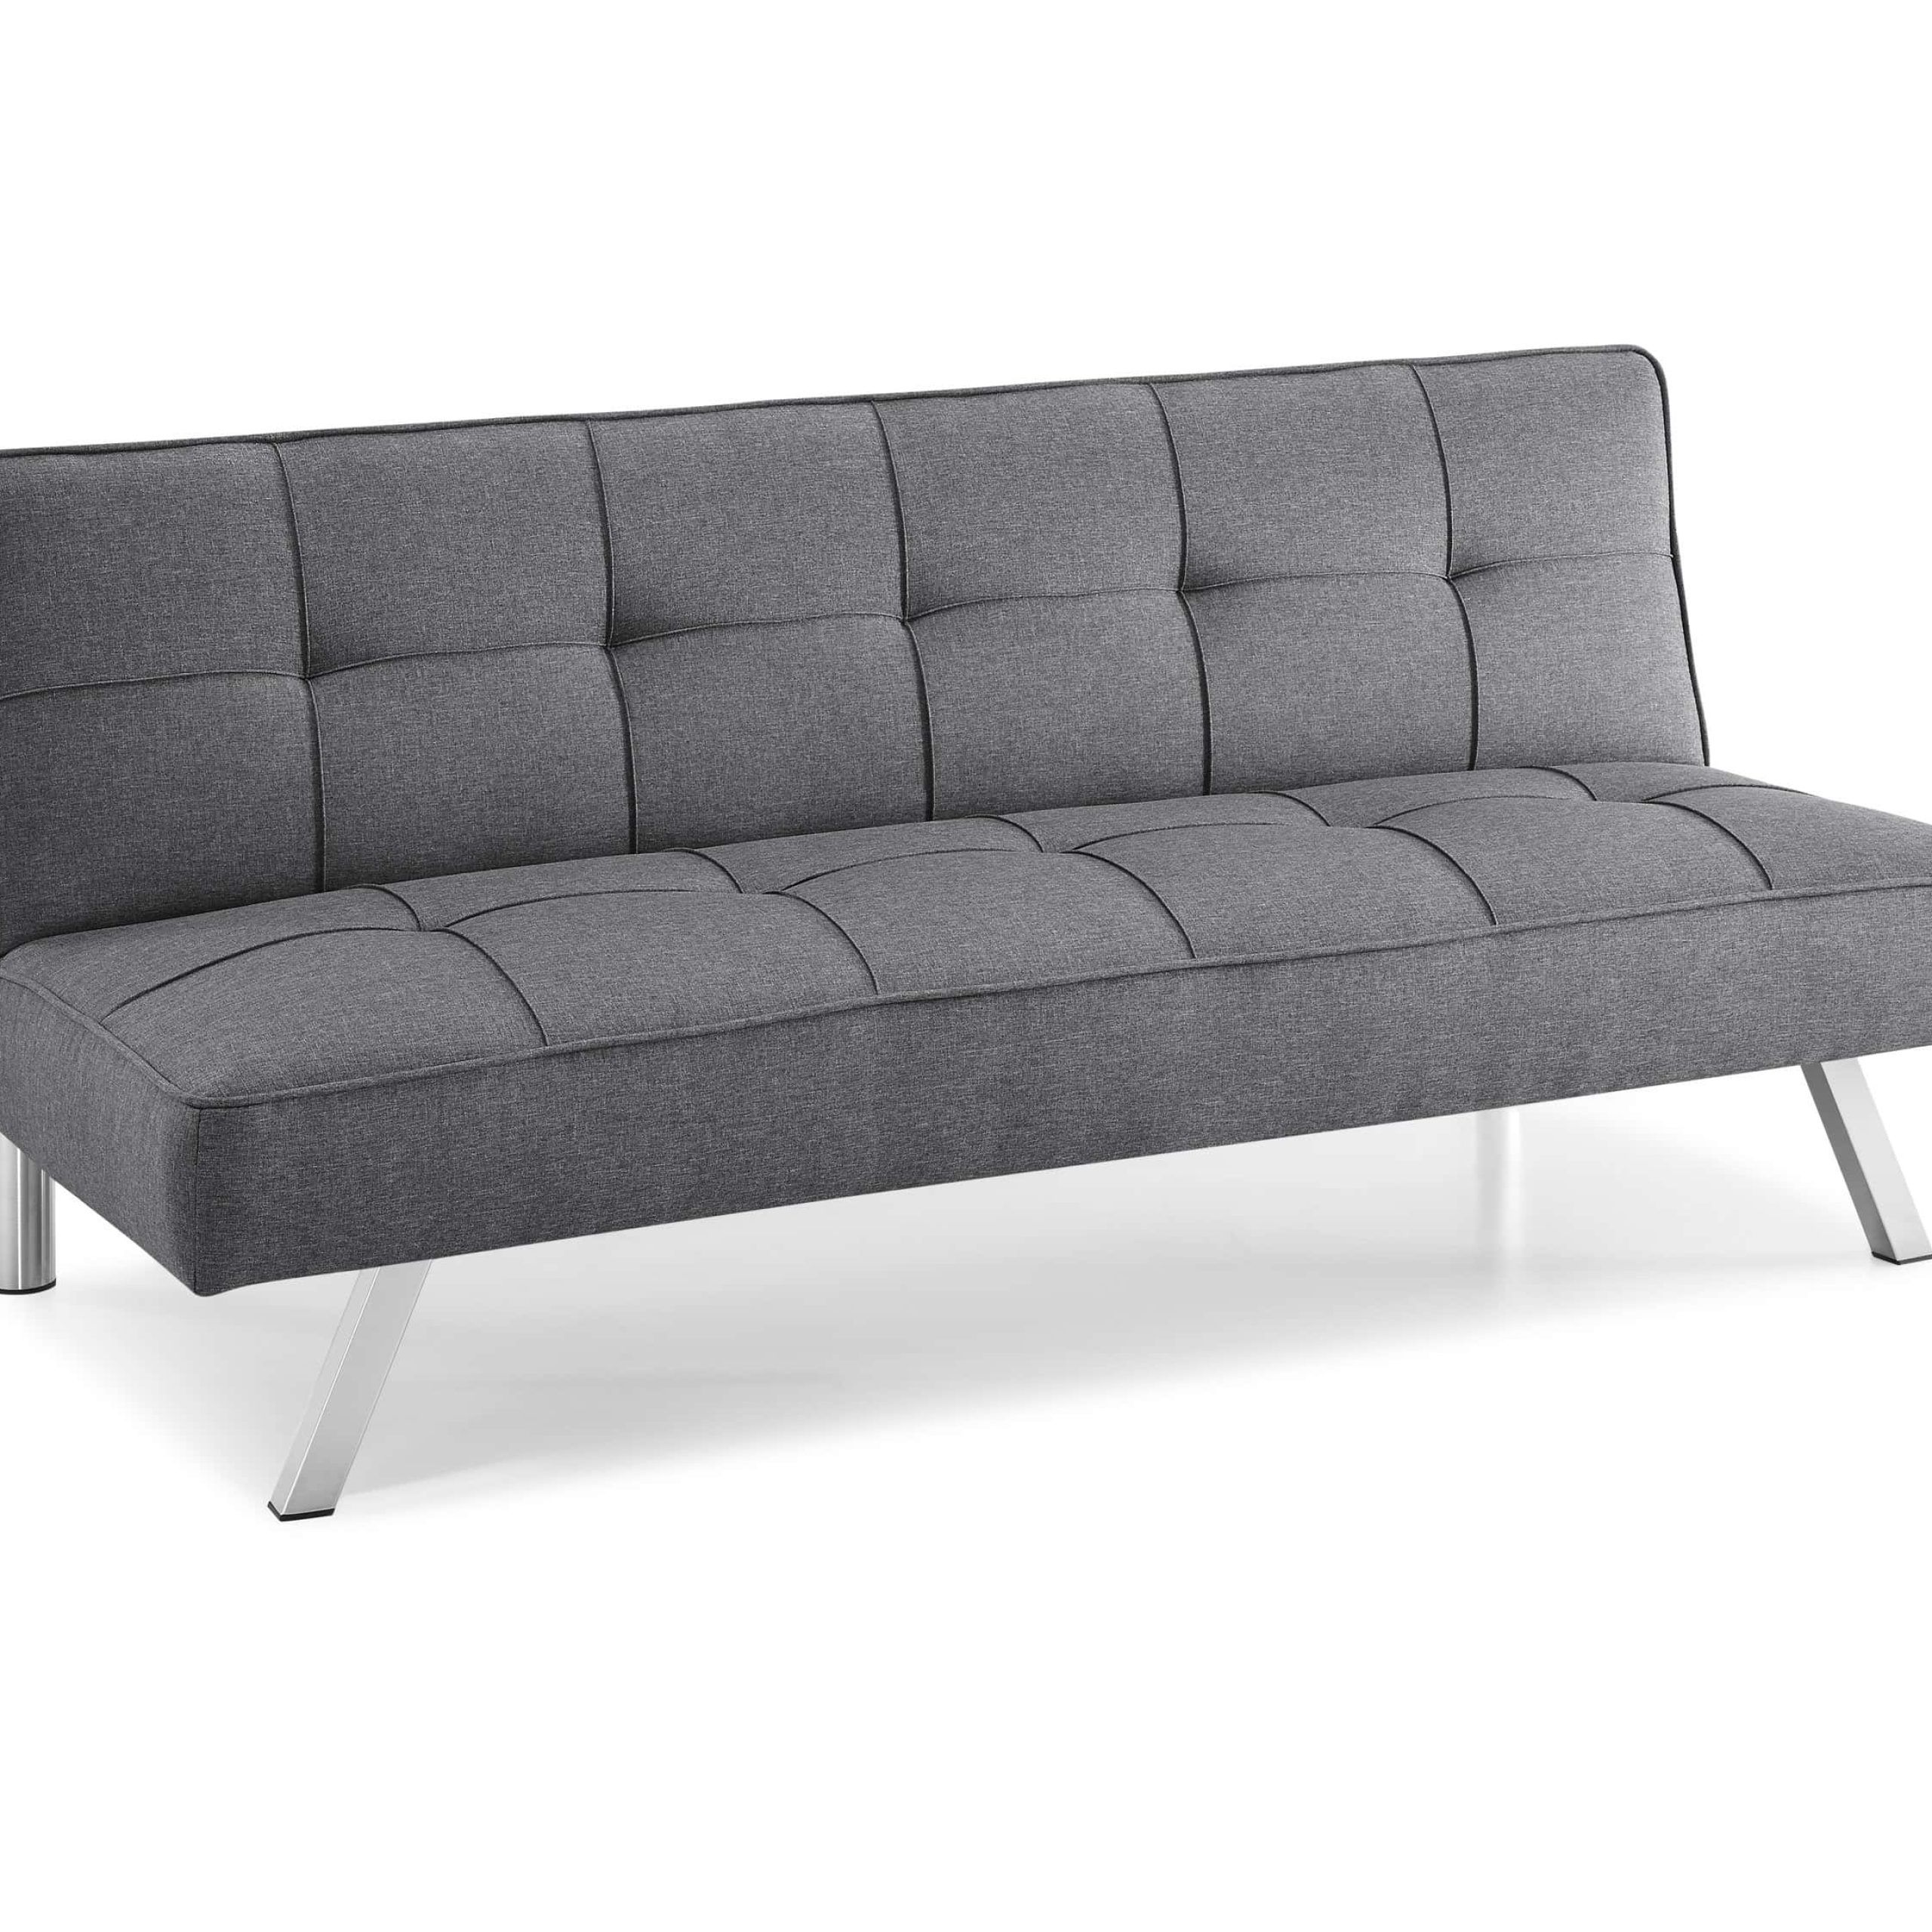 Serta® Corey Light Gray Sofa Bedlifestyle Solutions Regarding Convertible Light Gray Chair Beds (View 12 of 15)